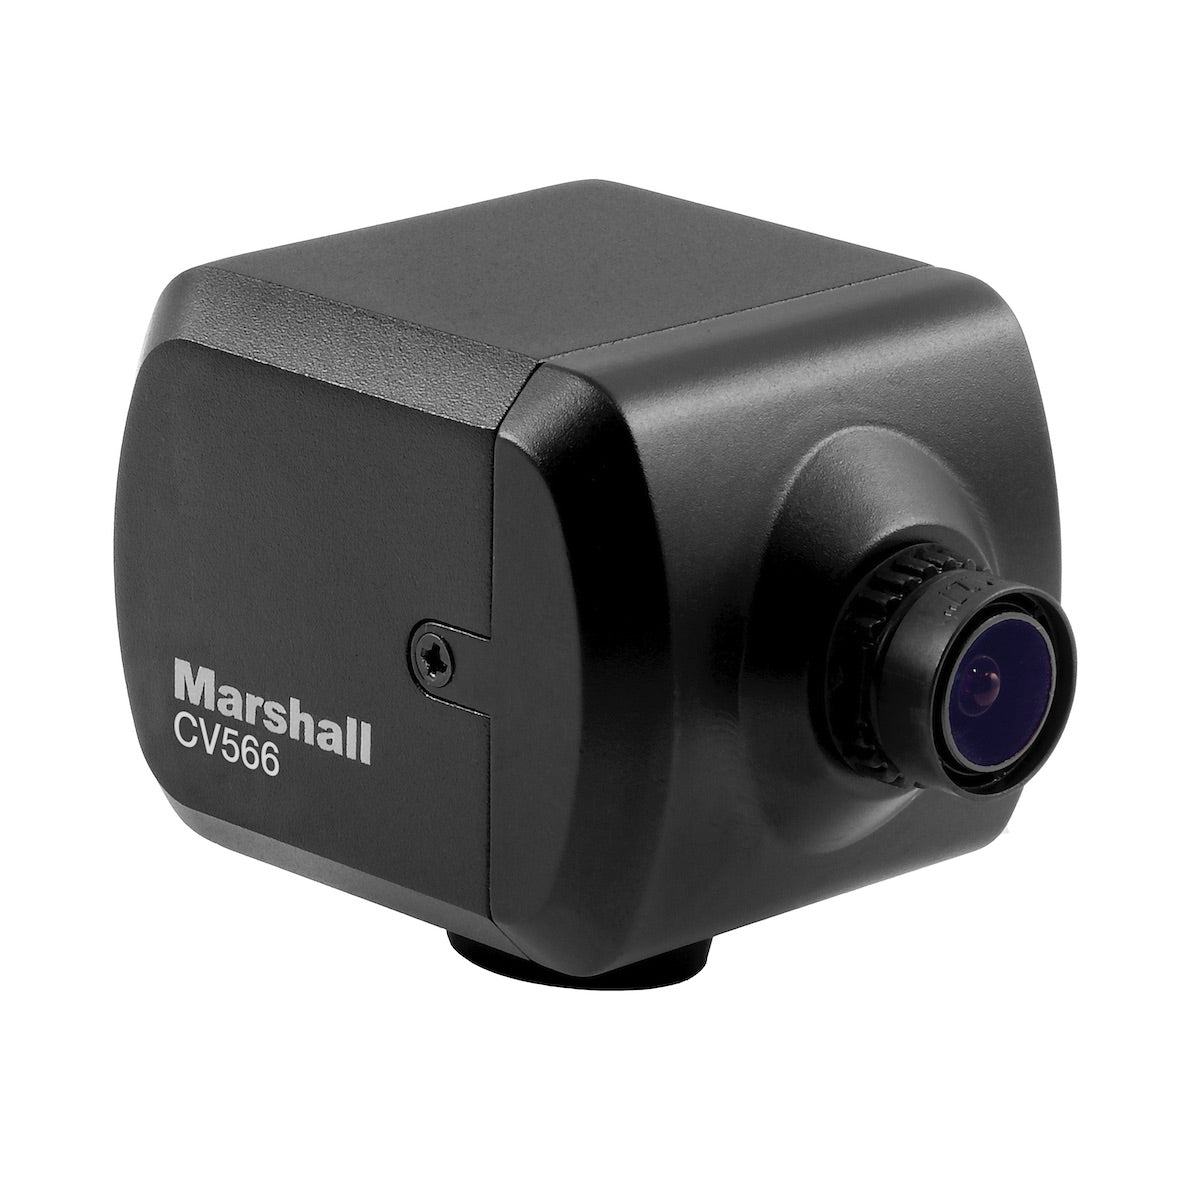 Marshall CV566 - Miniature HD Video Camera with Genlock, angled right